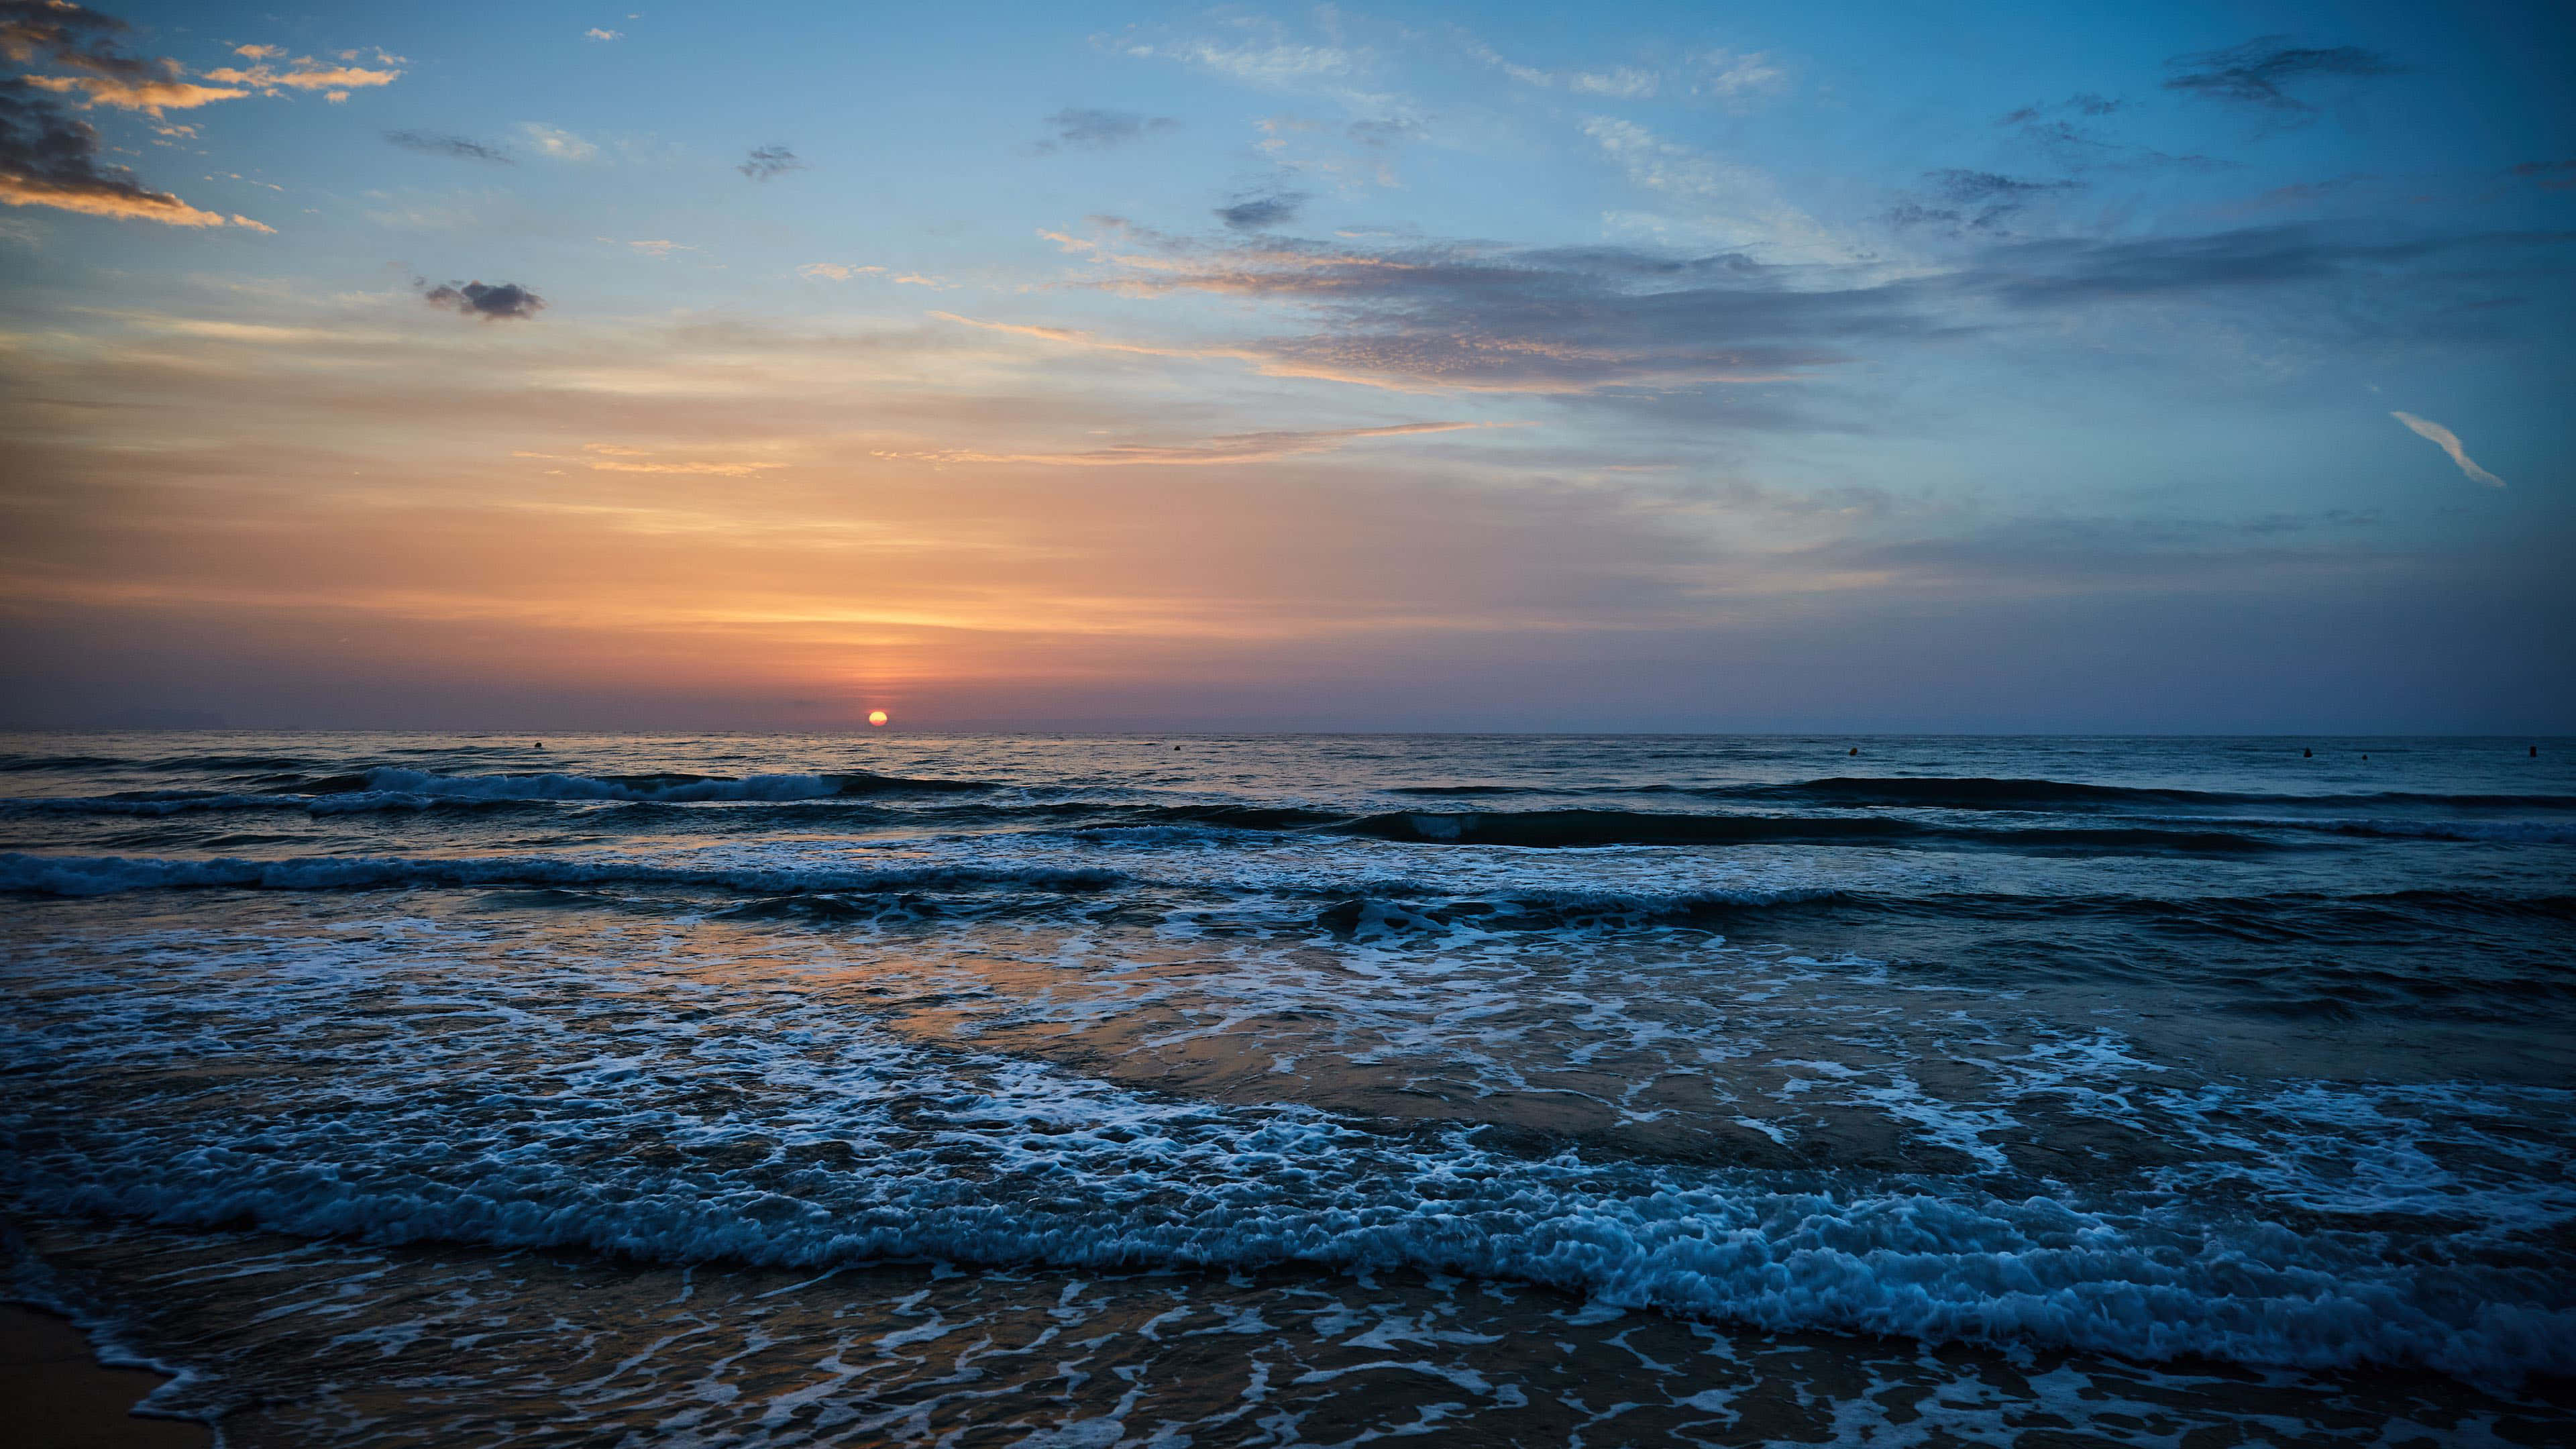 Mystifying 4k Ocean View With Vibrant Sunrise Wallpaper